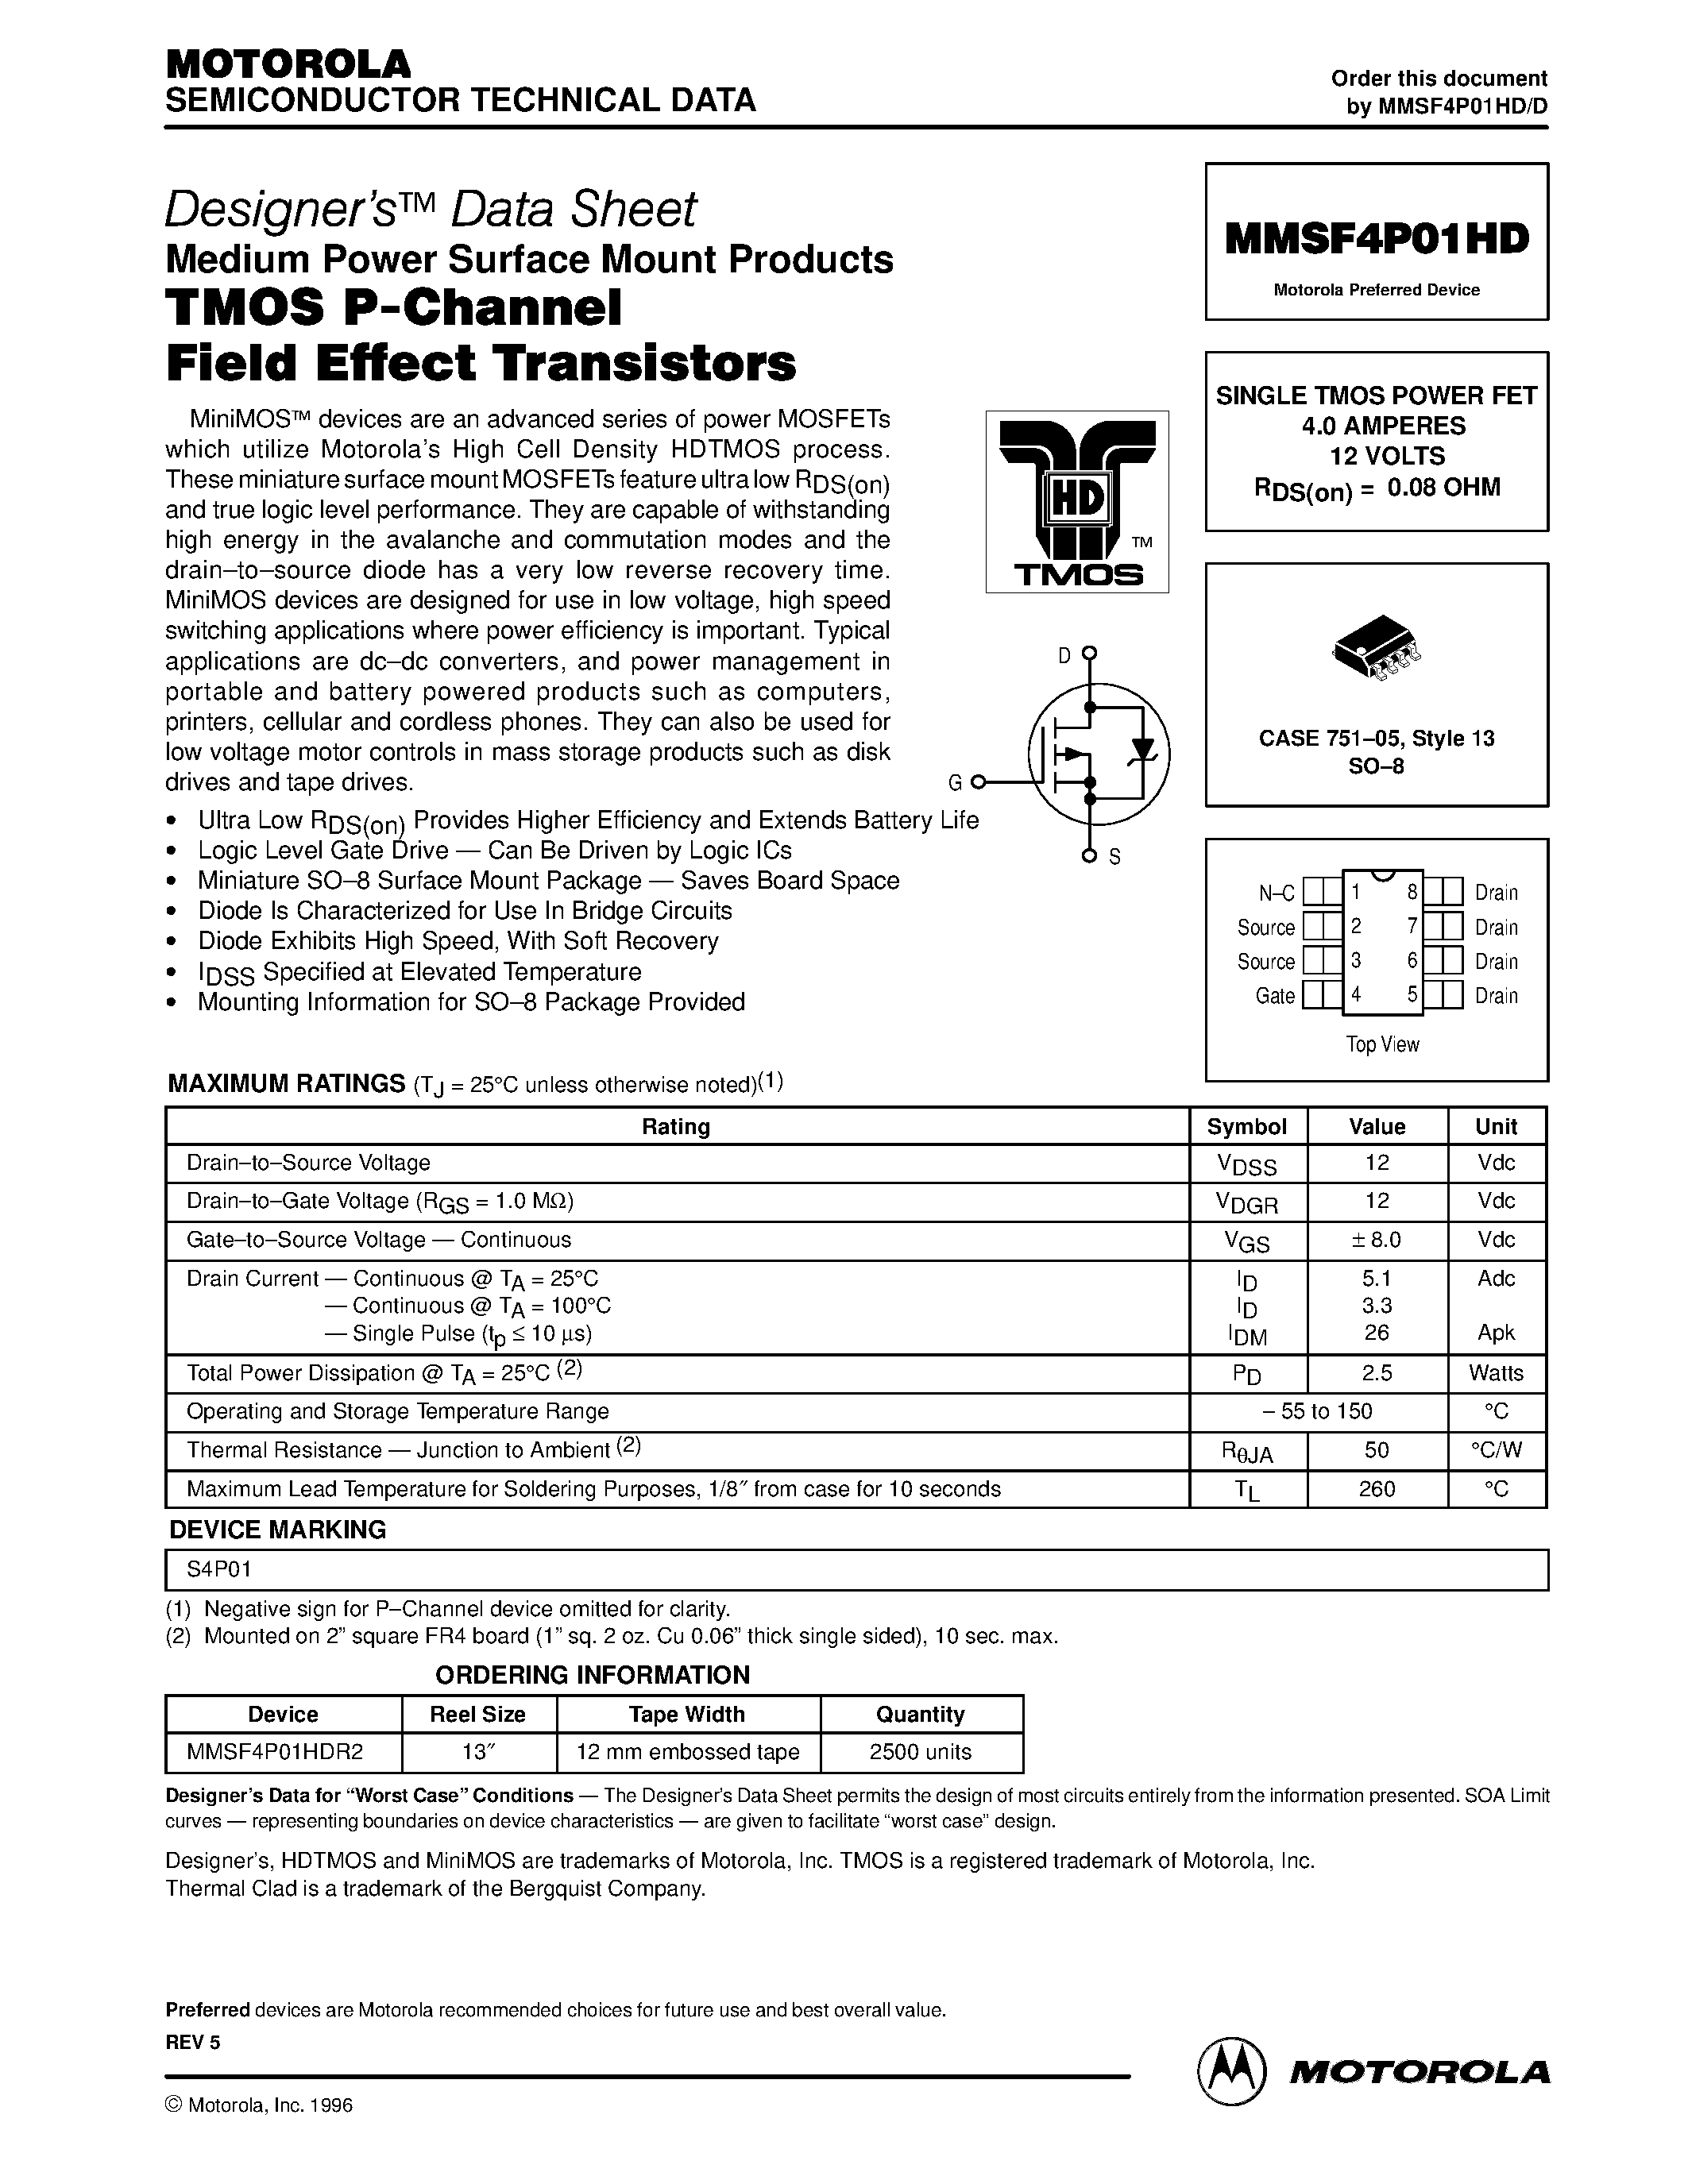 Даташит MMSF4P01HD - SINGLE TMOS POWER FET 4.0 AMPERES 12 VOLTS страница 1